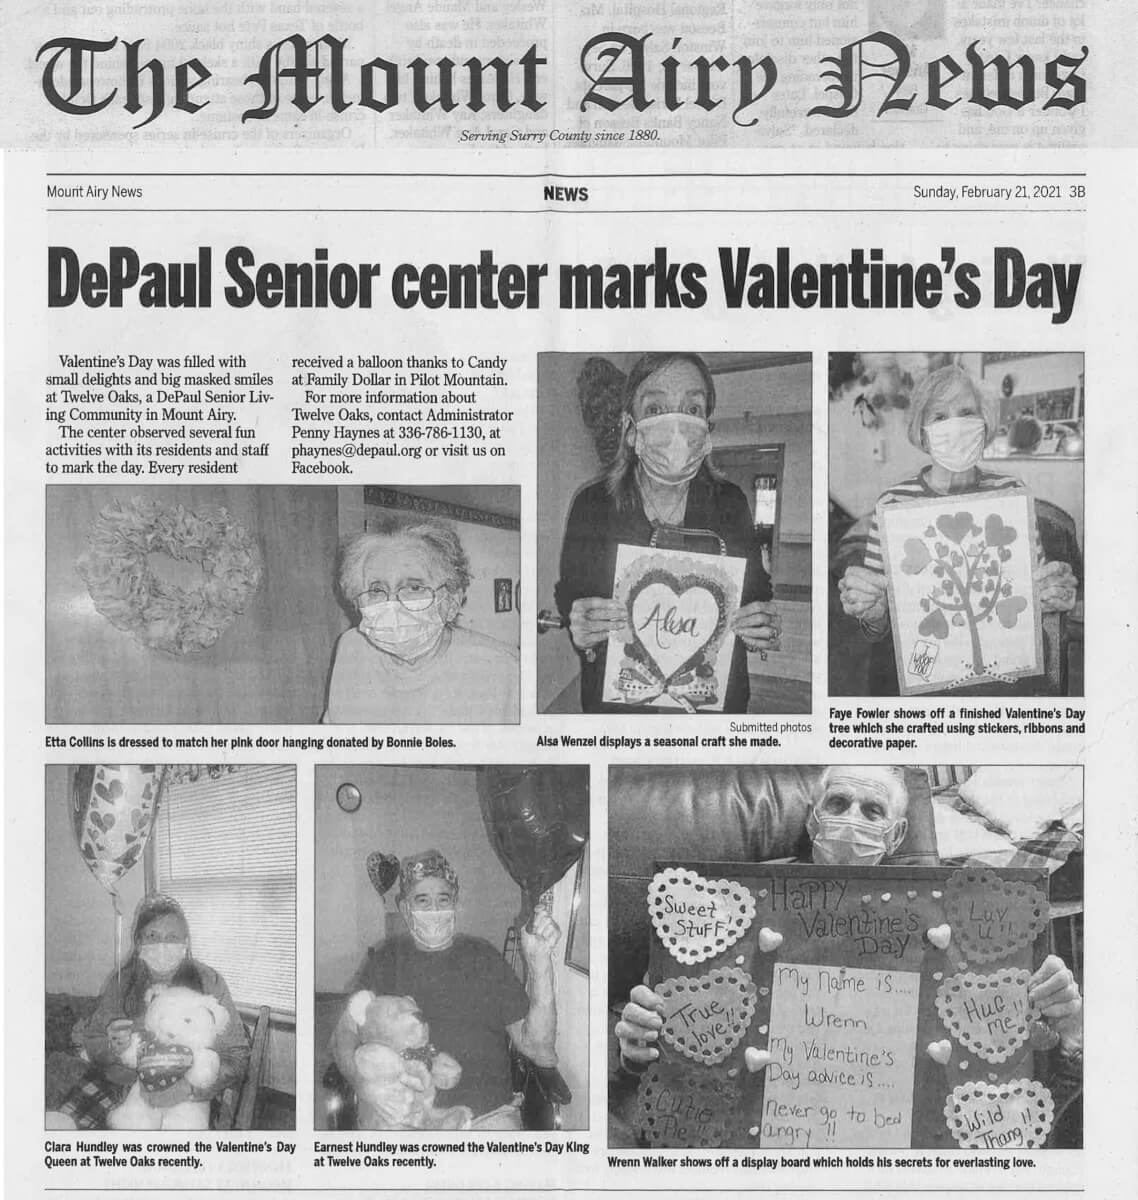 Twelve Oaks Valentine's Day Feb 21 2021 Mount Airy News